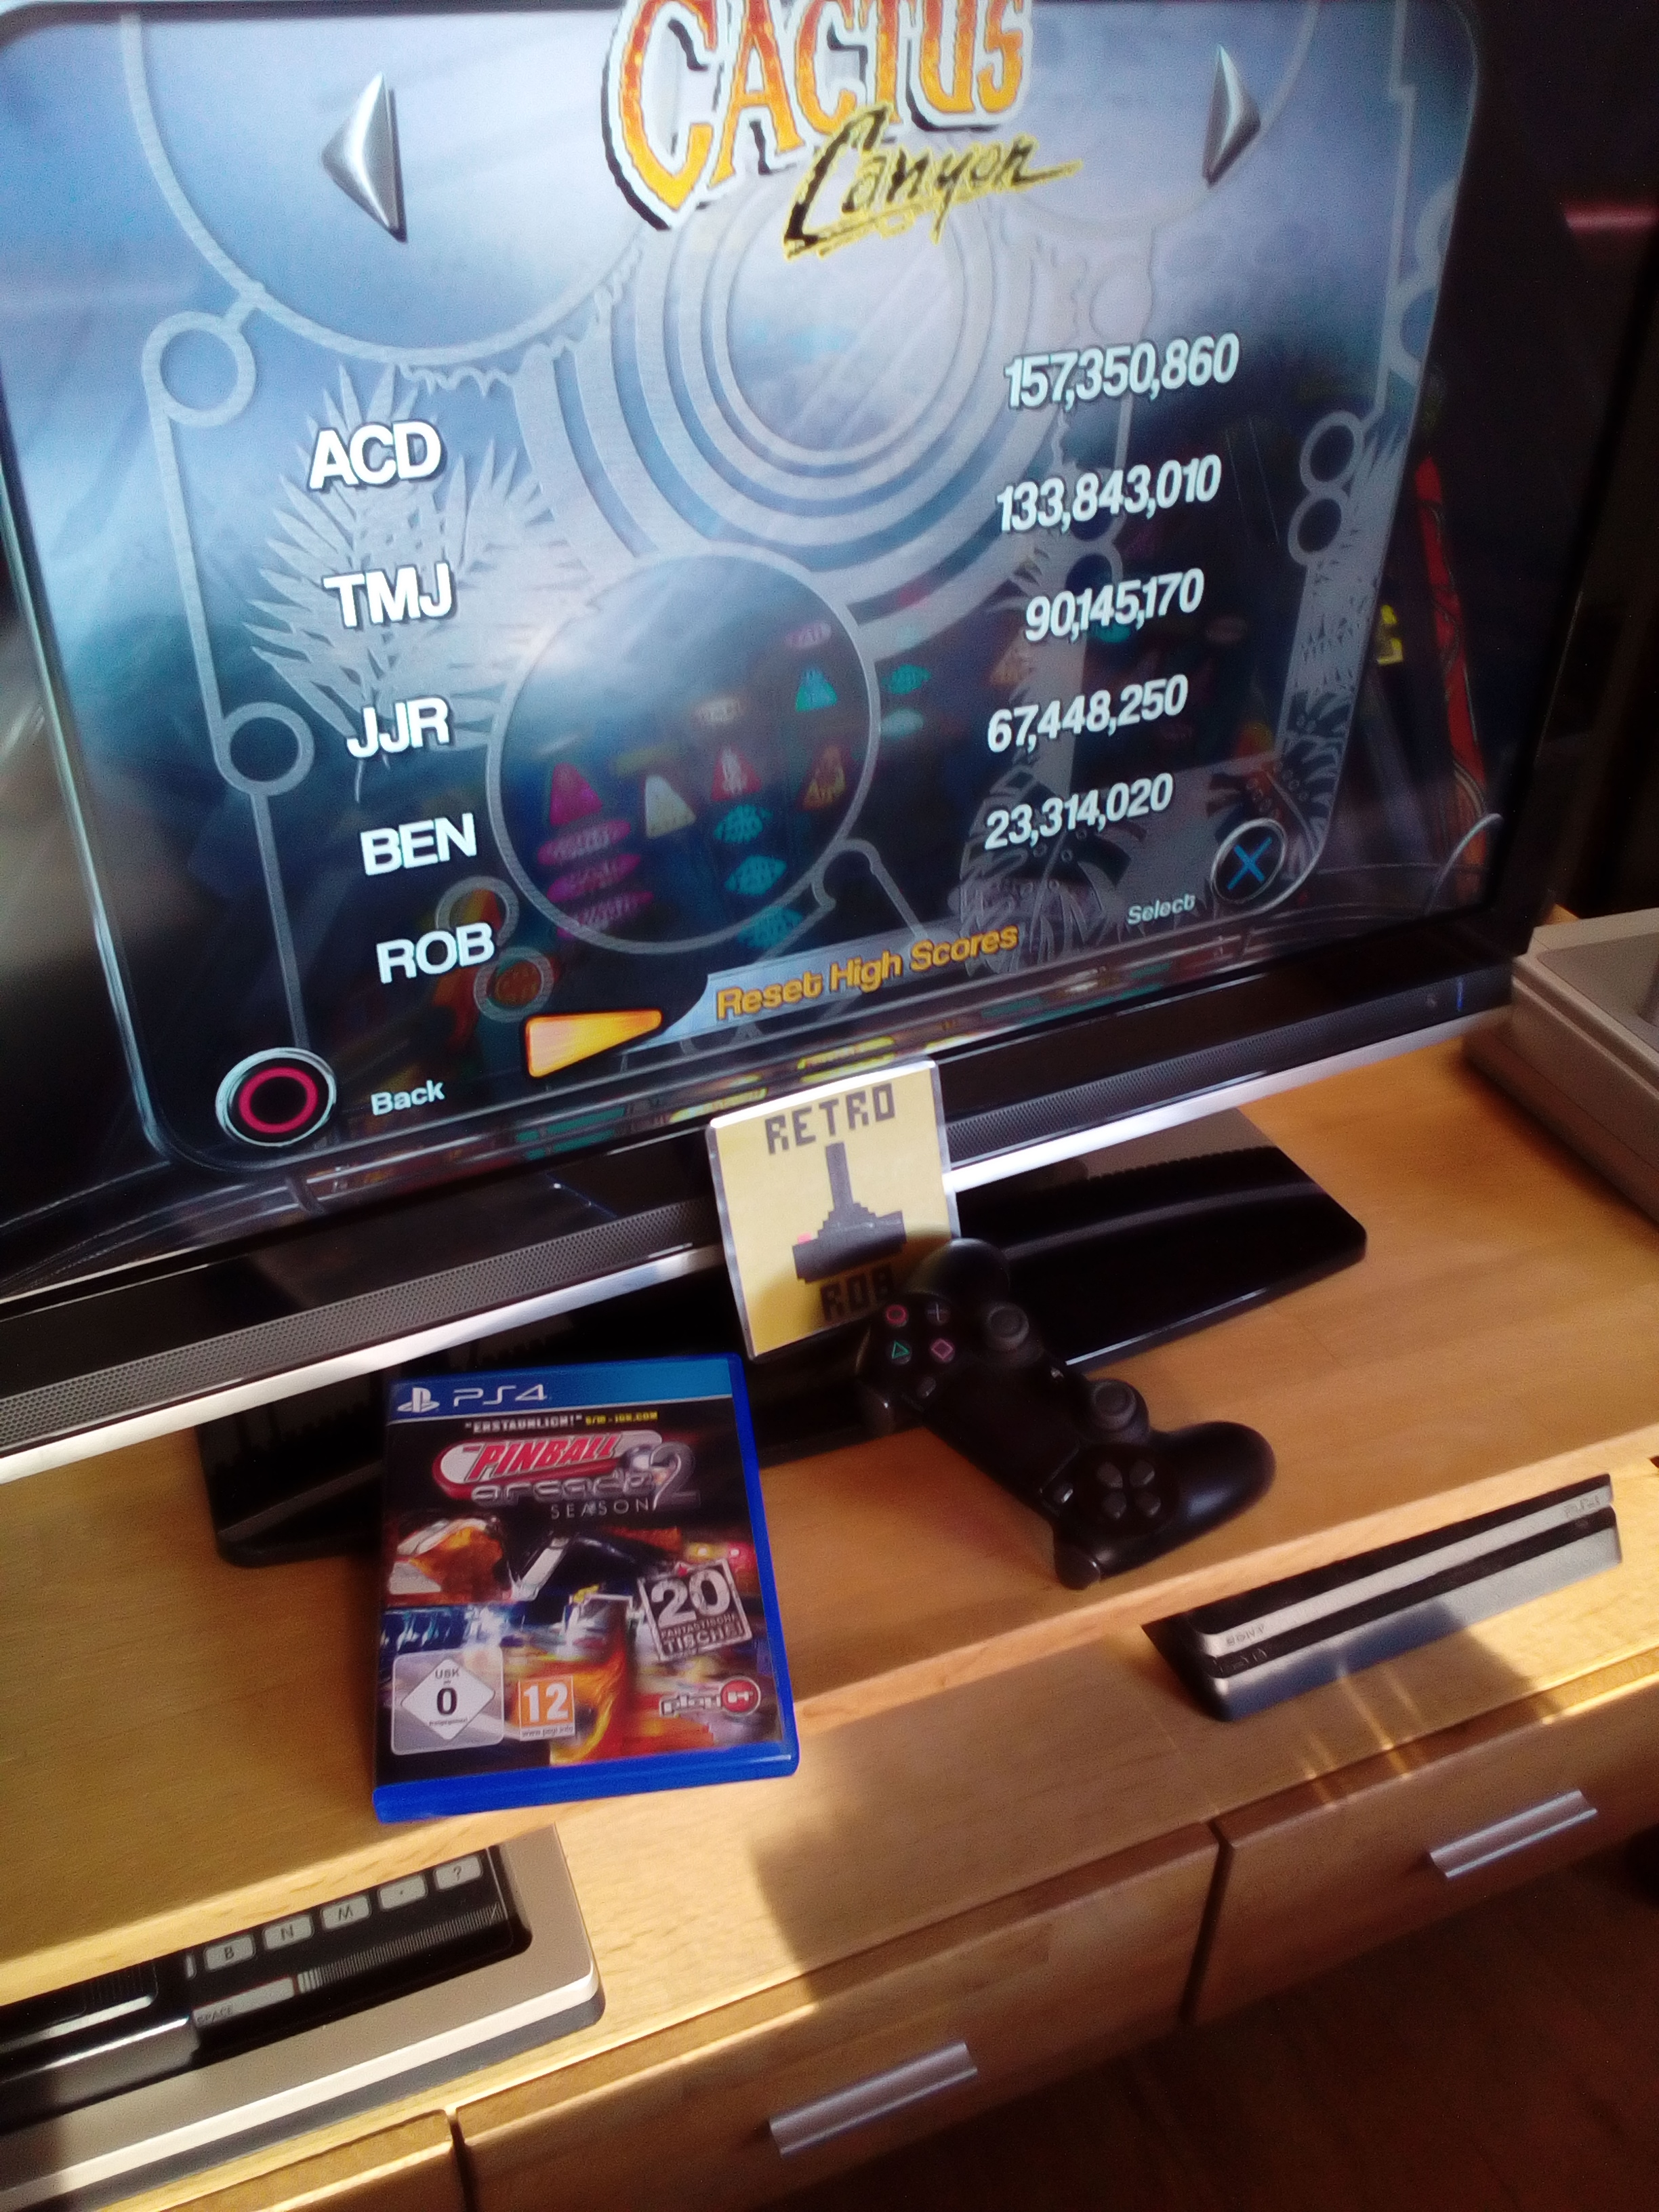 RetroRob: Pinball Arcade: Cactus Canyon (Playstation 4) 23,314,020 points on 2020-04-19 13:04:41